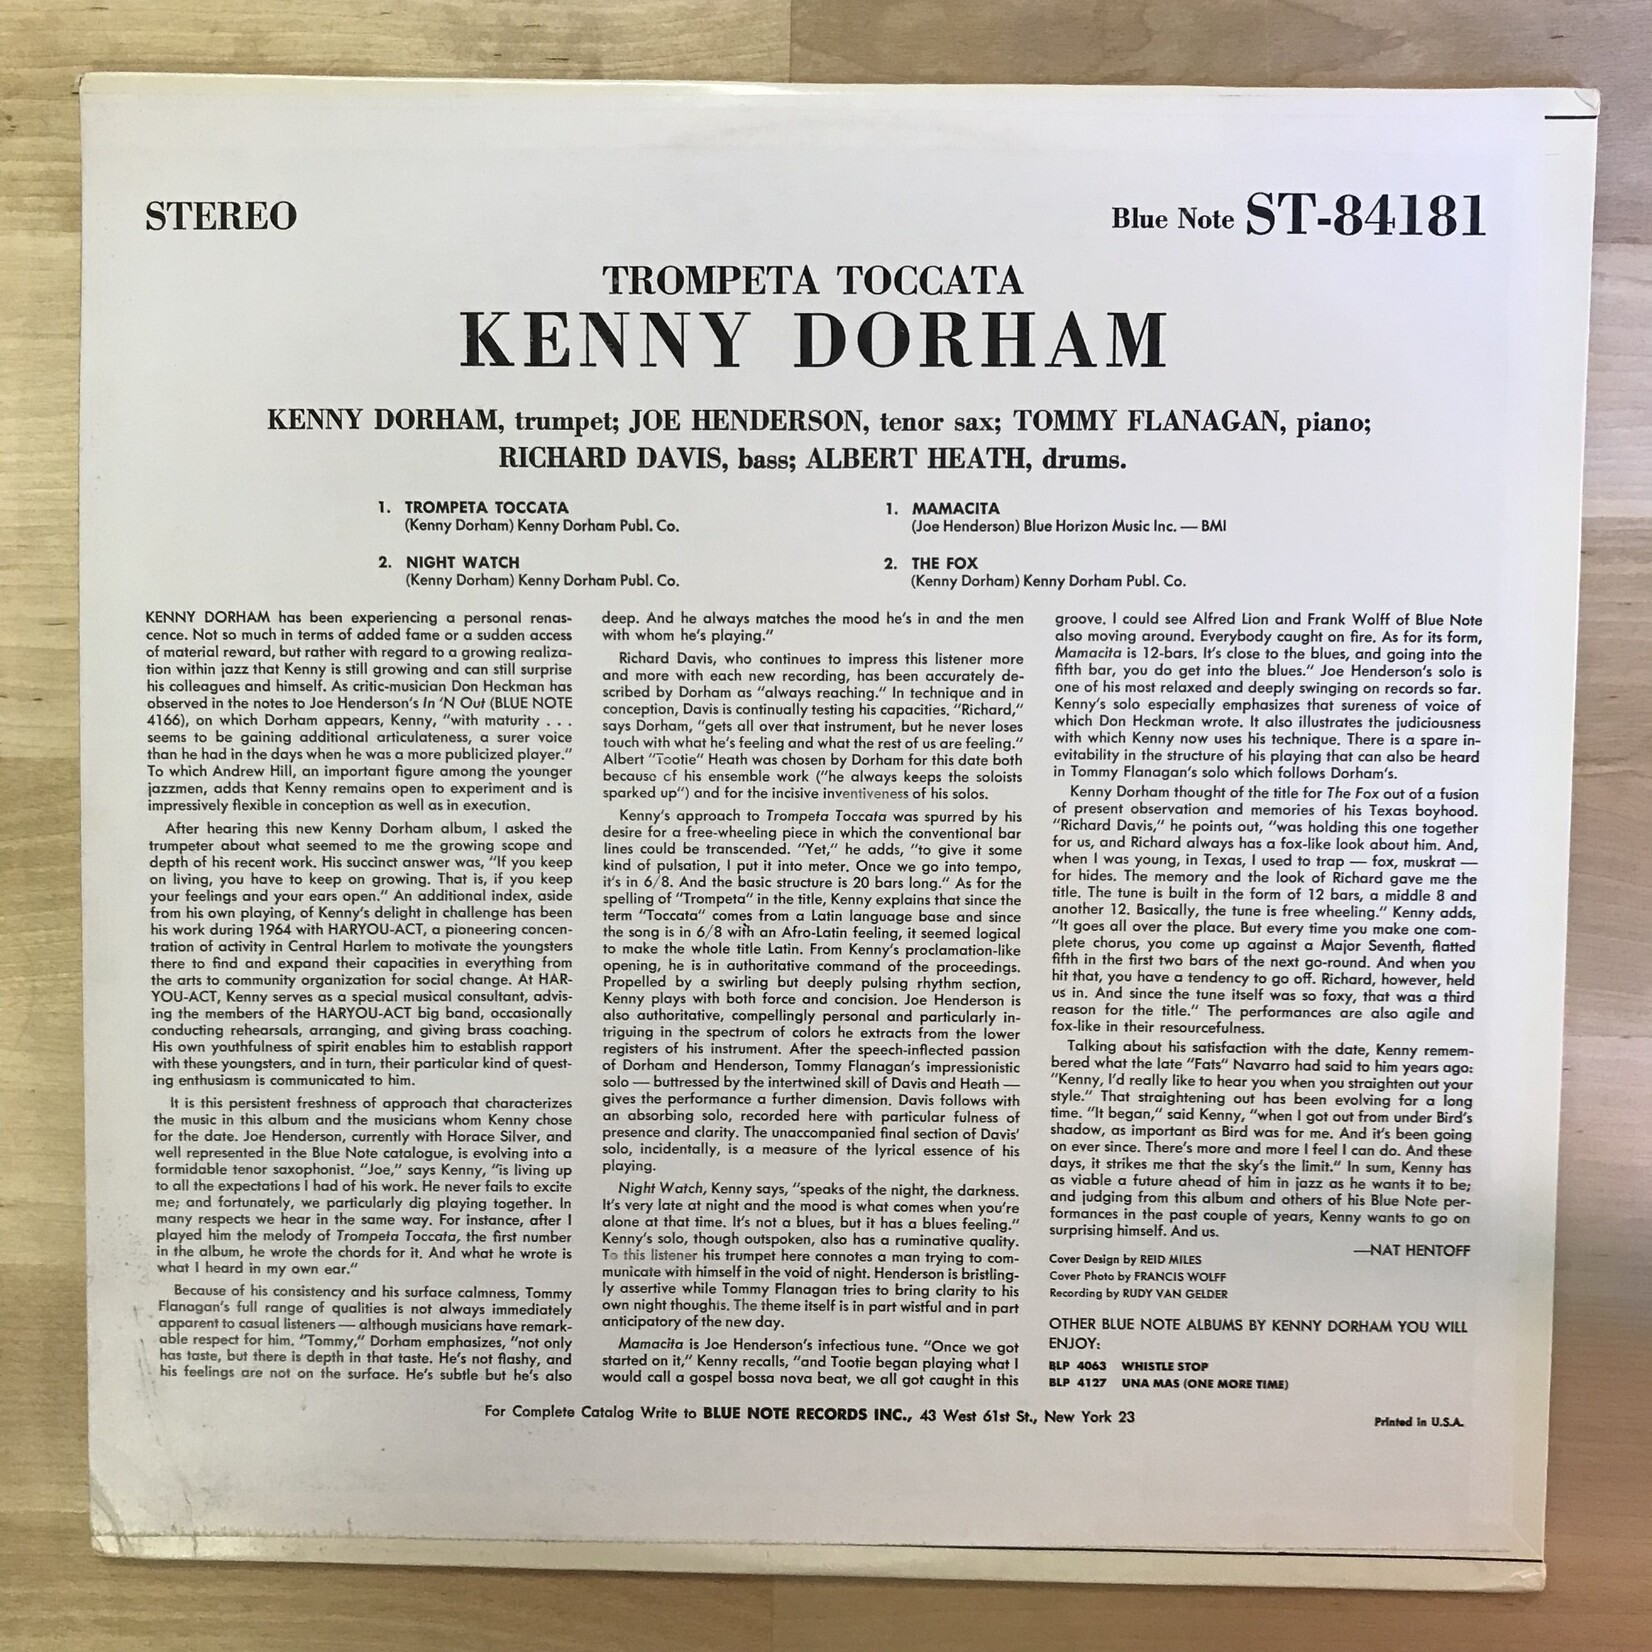 Kenny Dorham - Trompeta Toccata - BST84181 - Vinyl LP (USED)